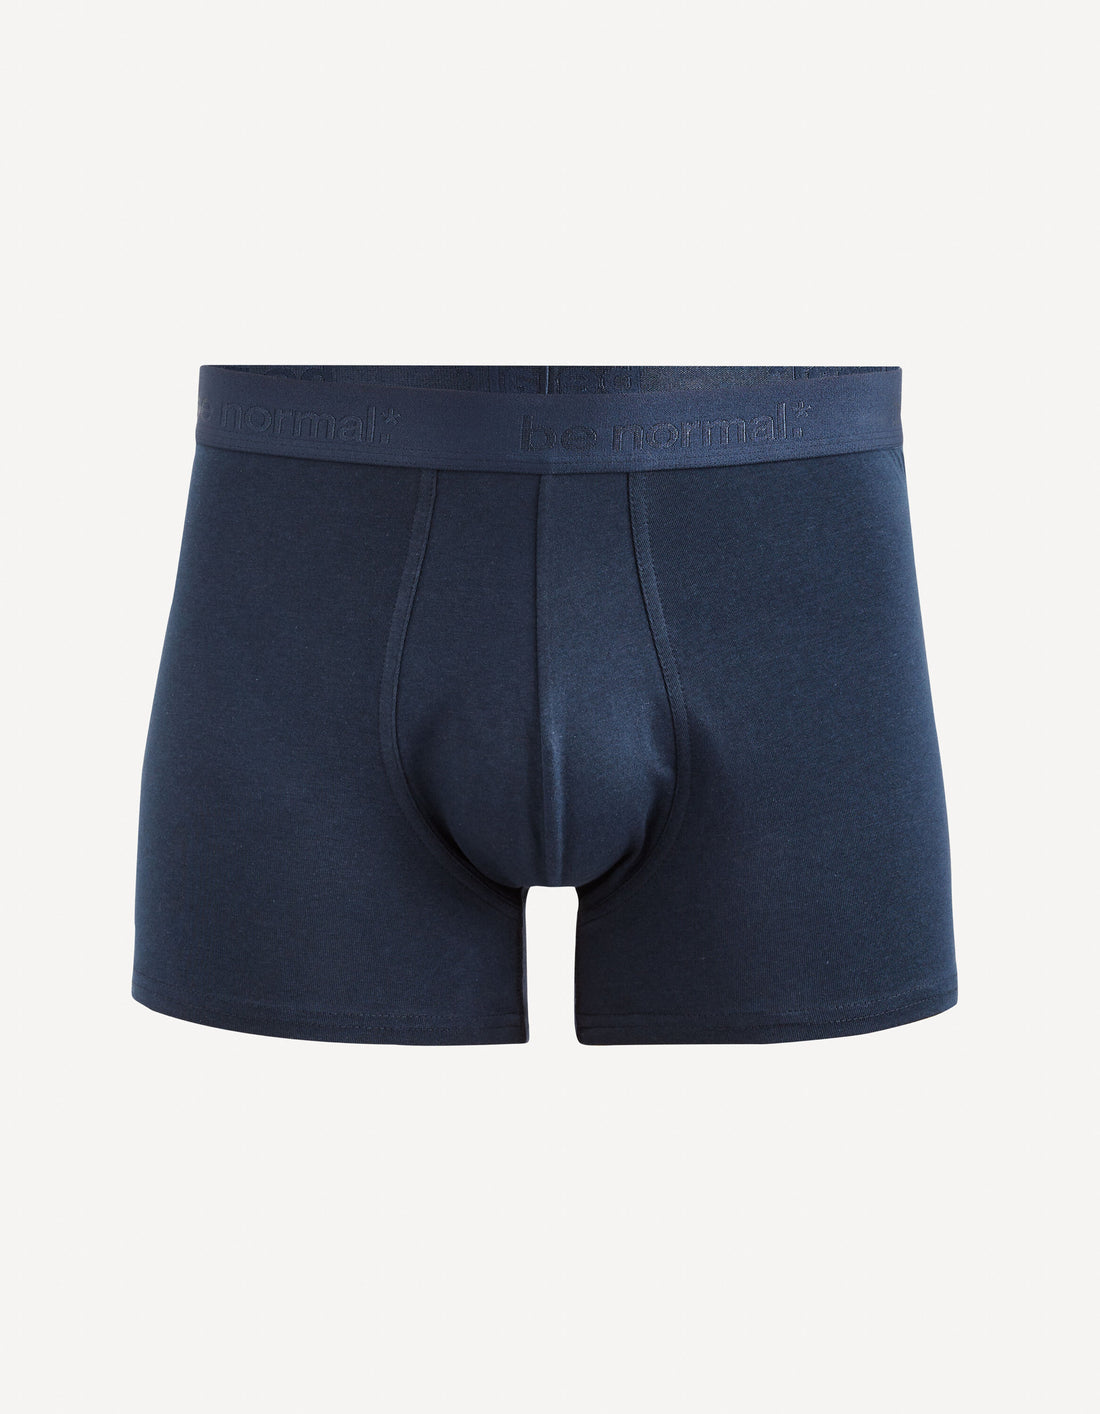 Stretch Cotton Boxer Shorts - Navy_BINORMAL_BLUE MEDIUM_01